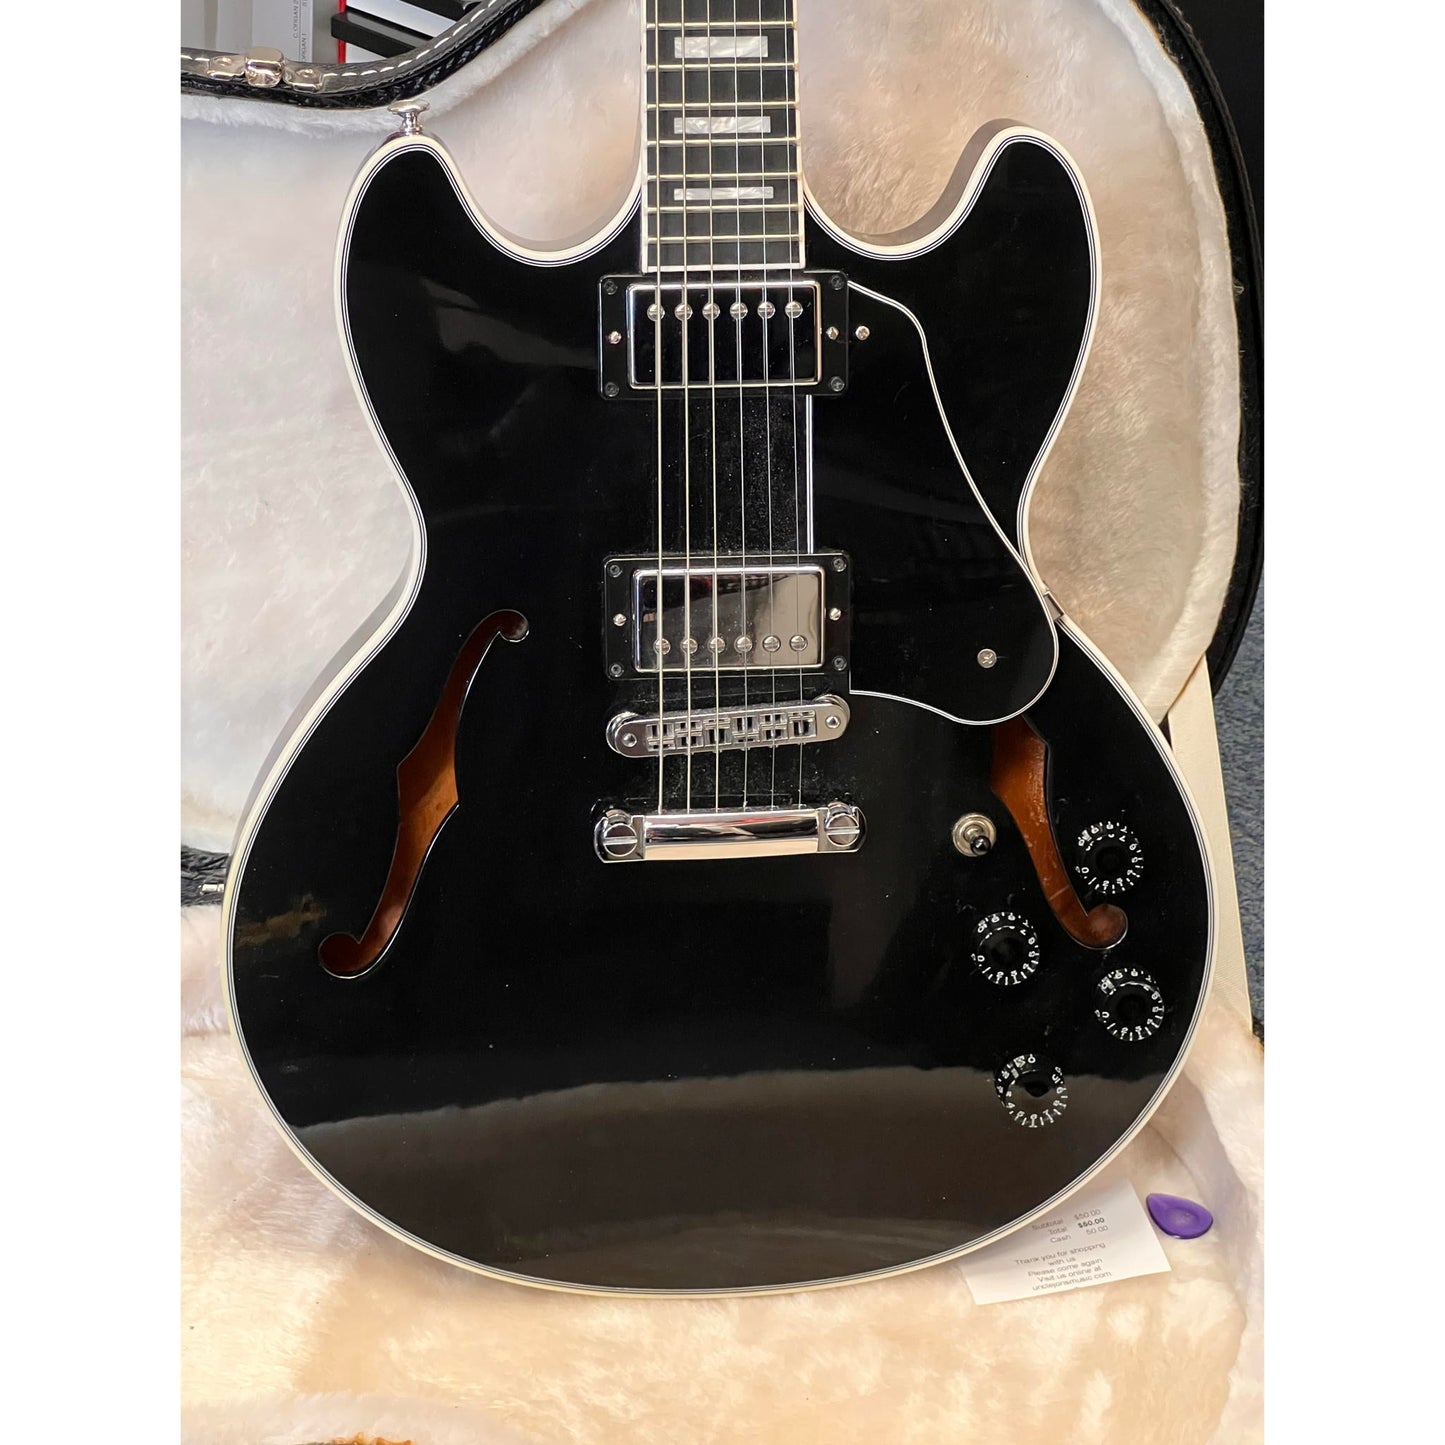 Gibson Midtown Custom Semi-Hollowbody Guitar Black 2014 model  Excellent